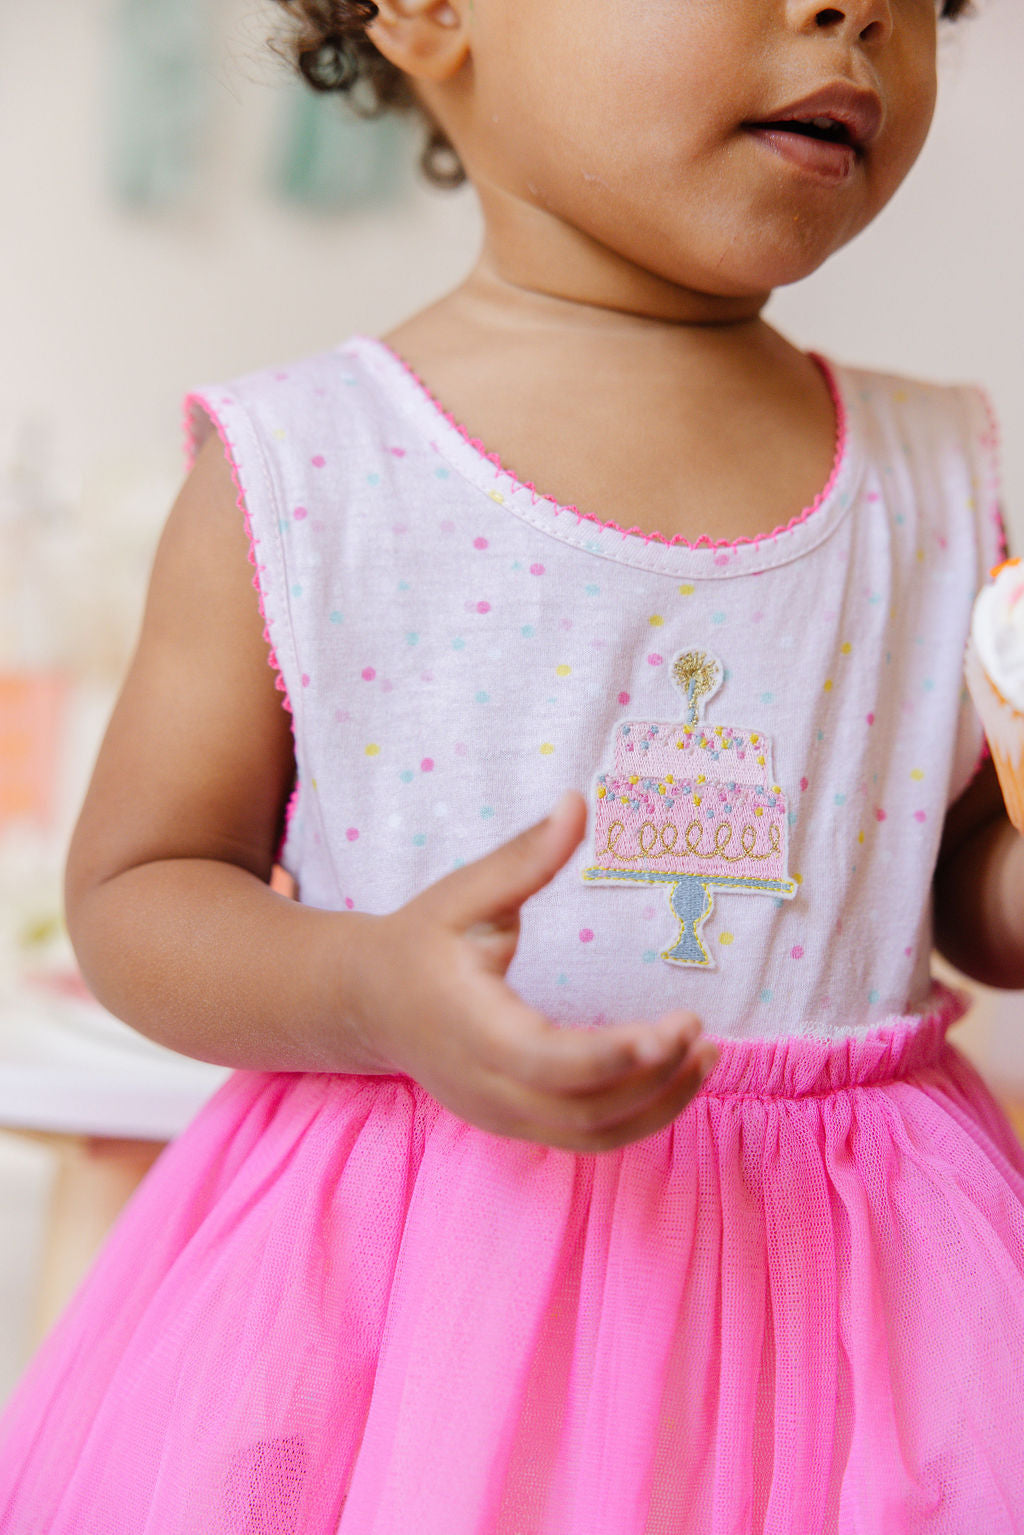 Pin by RC on Kids fashion | 1st birthday girl dress, Birthday girl dress,  Baby girl birthday dress